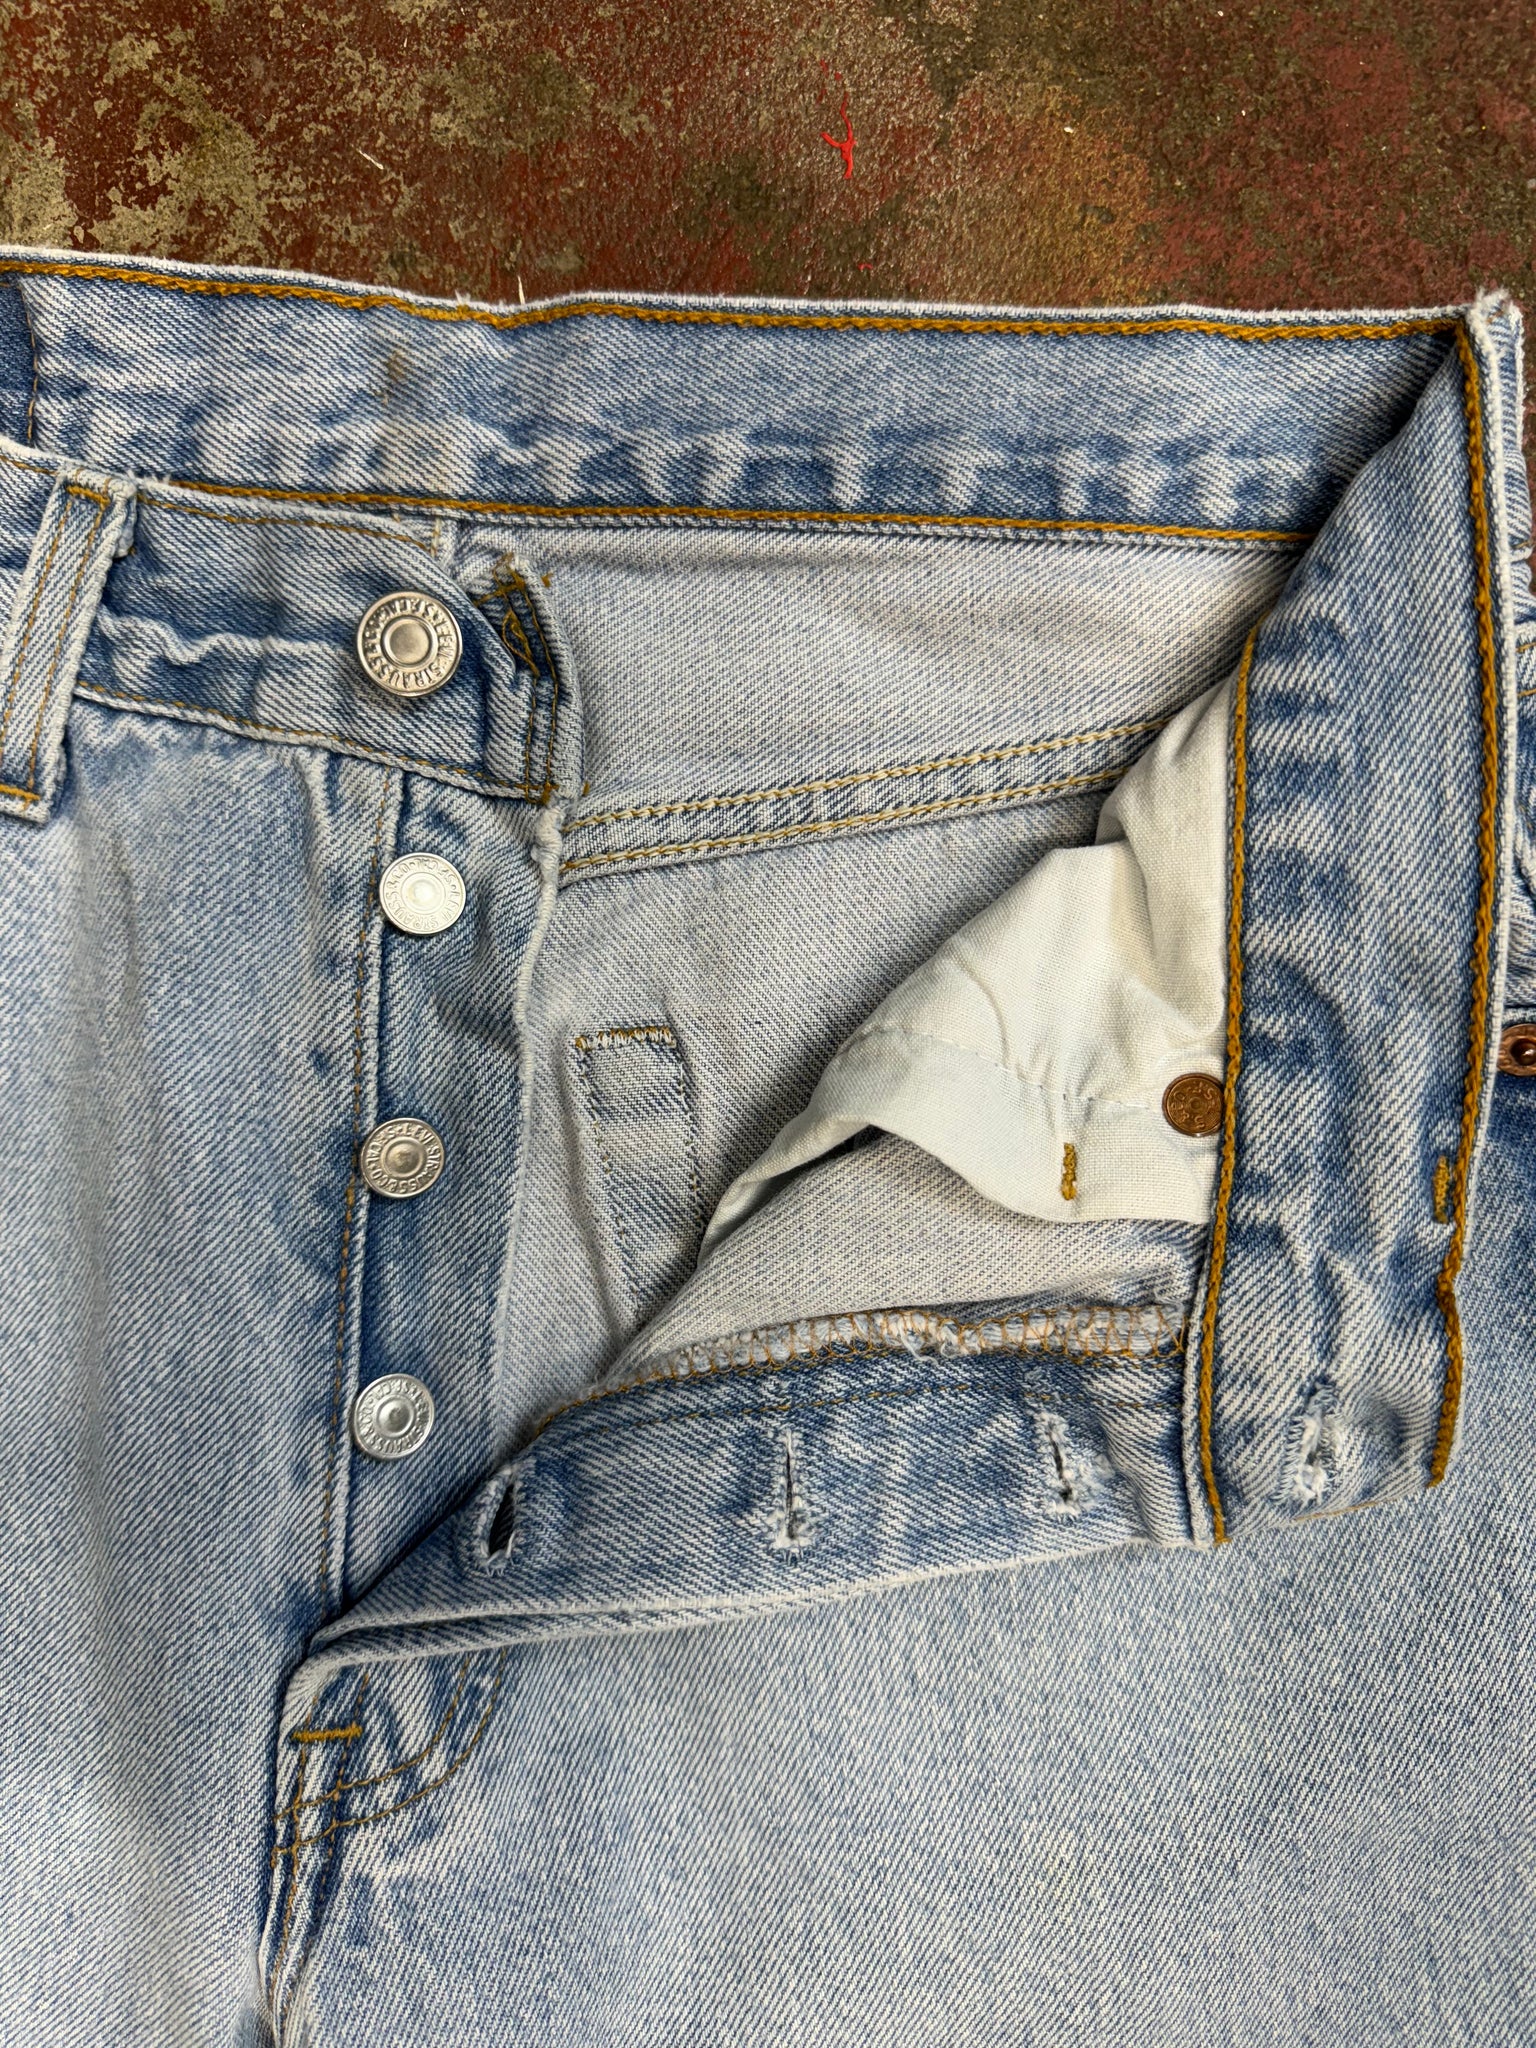 Vintage USA Levi's 501 Light Wash Denim Jeans (JYJ0324-097)